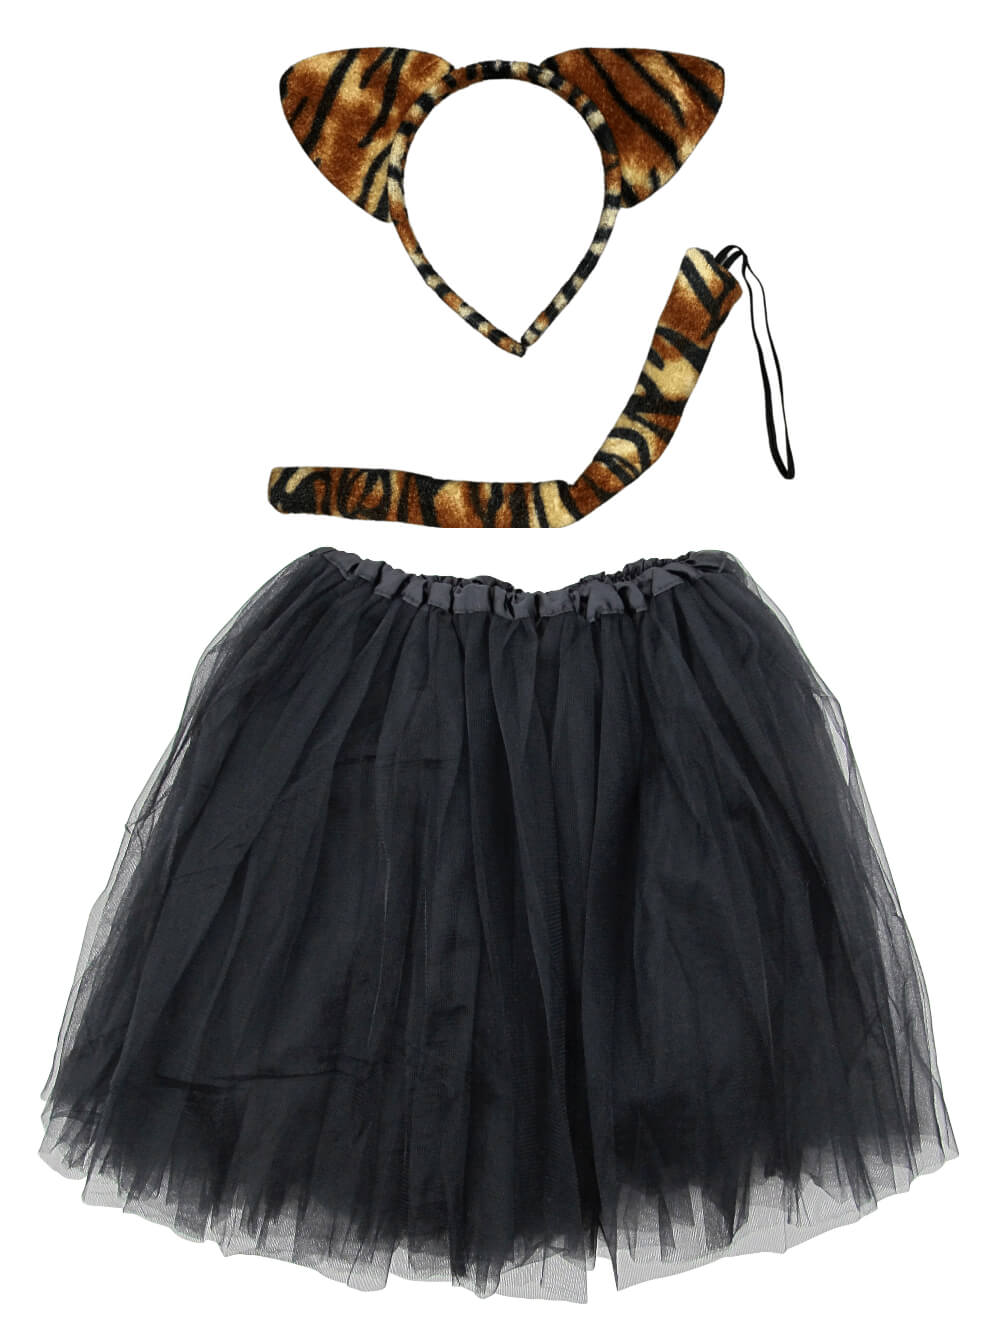 Adult Tiger Costume - Black Tutu Skirt, Tail, & Headband Set for Adult or Plus Size - Sydney So Sweet